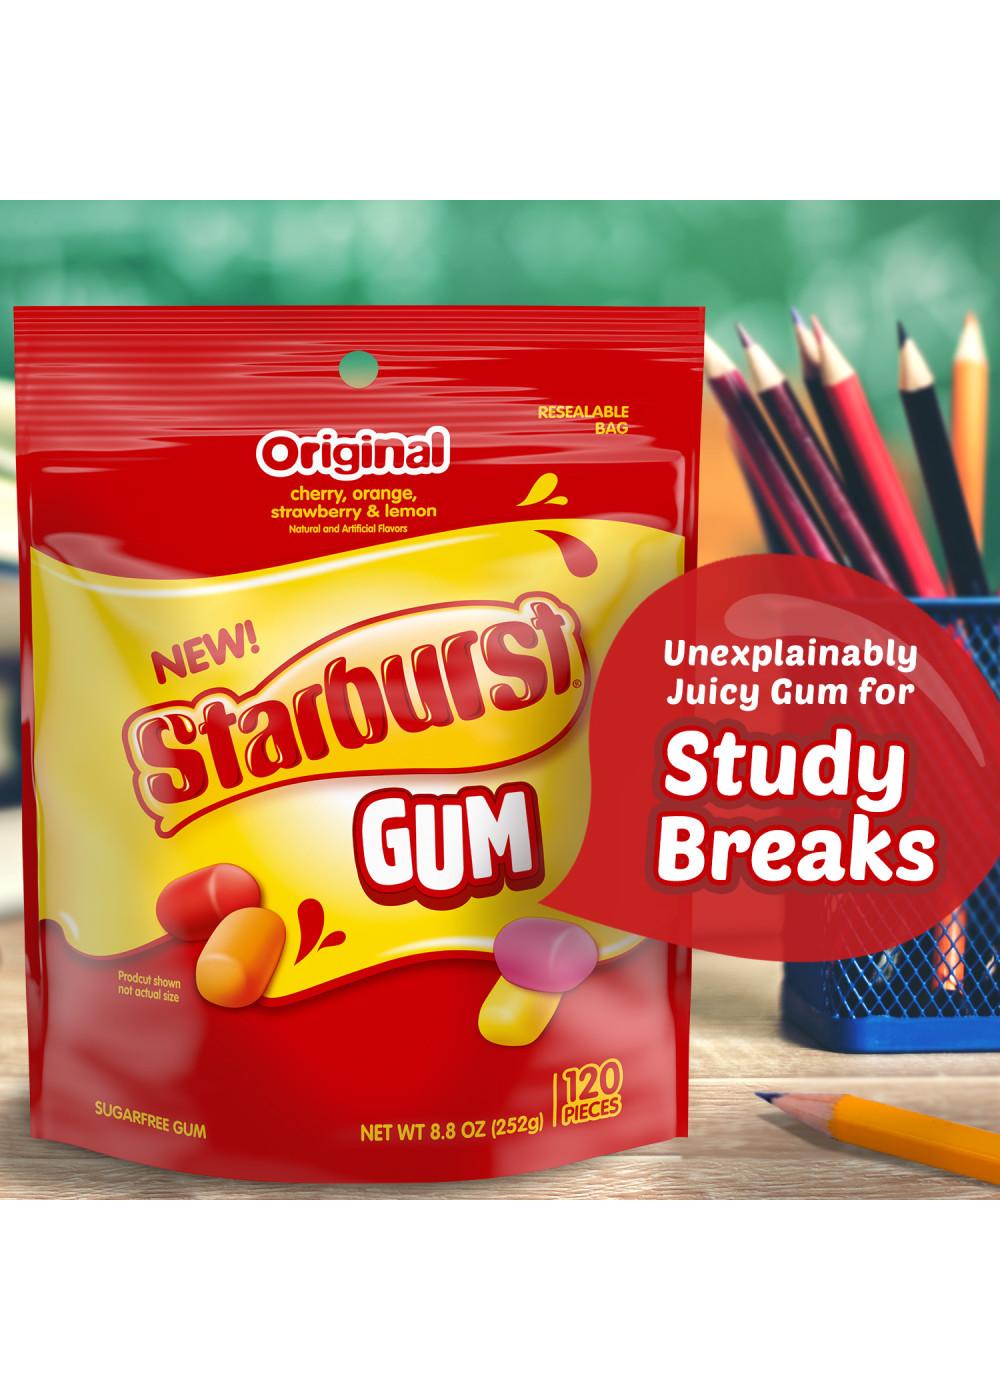 Starburst Original Sugarfree Chewing Gum; image 2 of 6